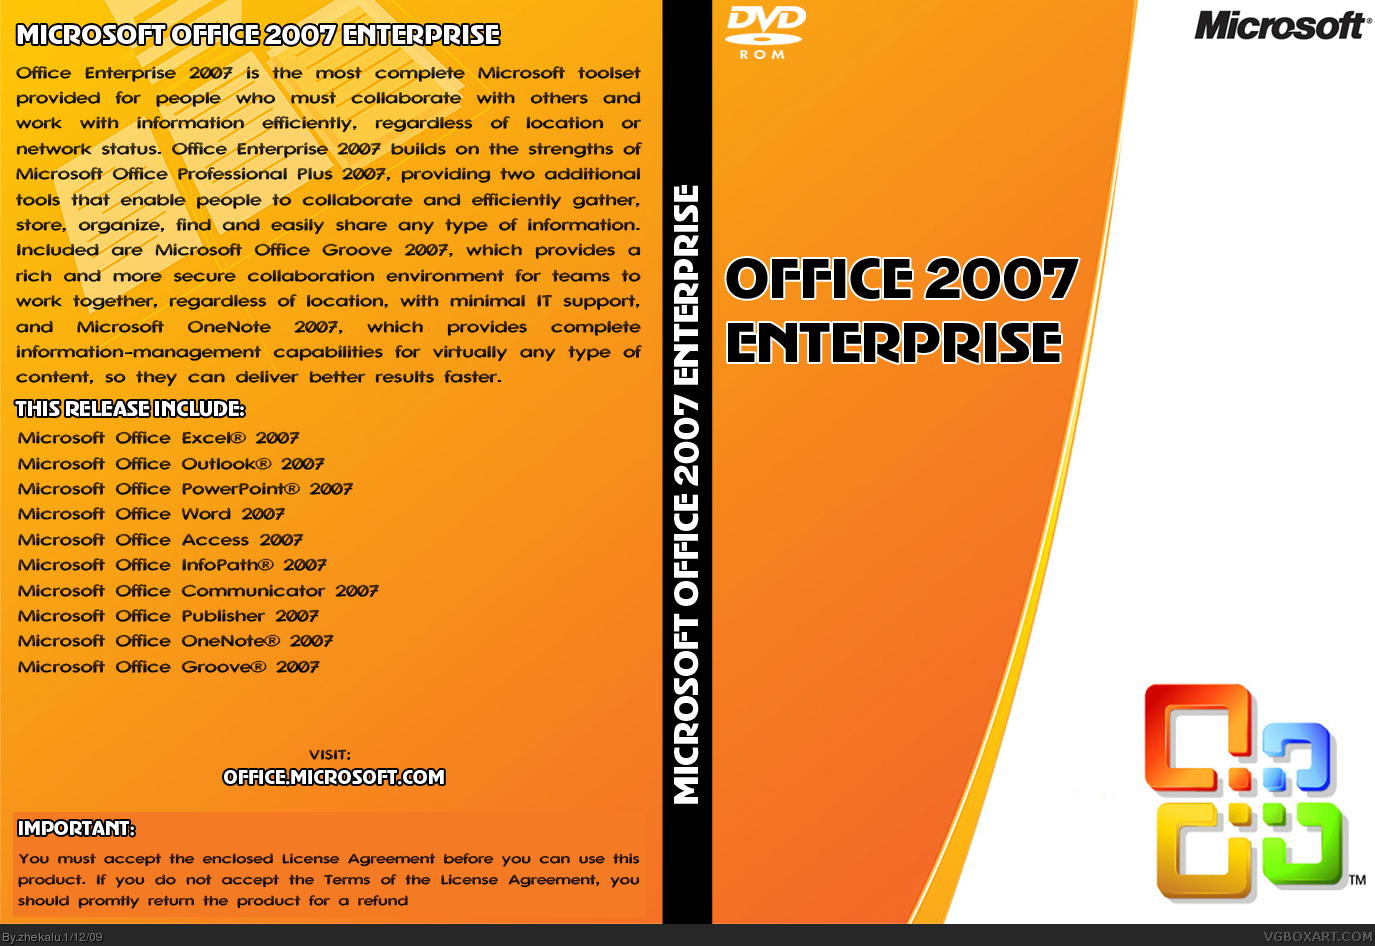 Microsoft Office 2007 Enterprise box cover